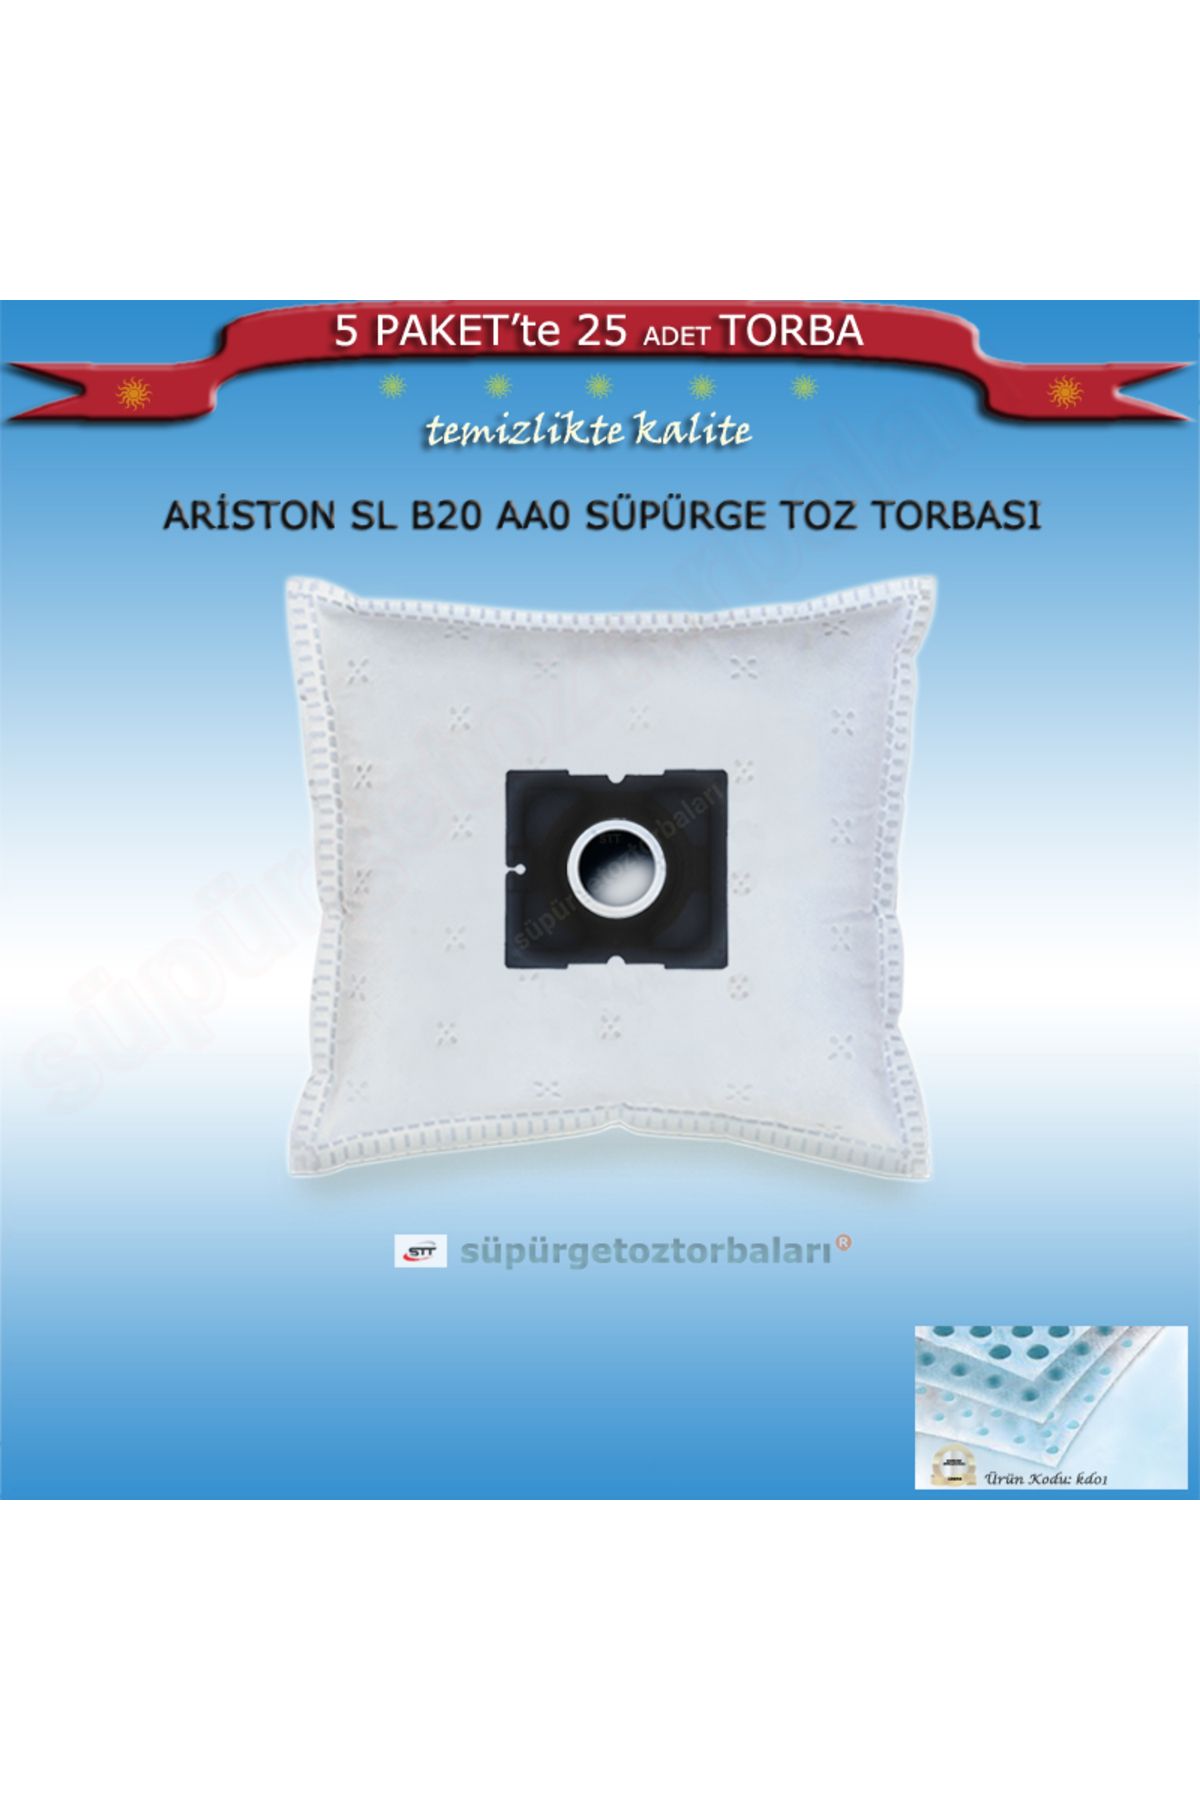 Ariston Sl B20 Aa0 Süpürge Toz Torbası 25 Adet Torba Kd01